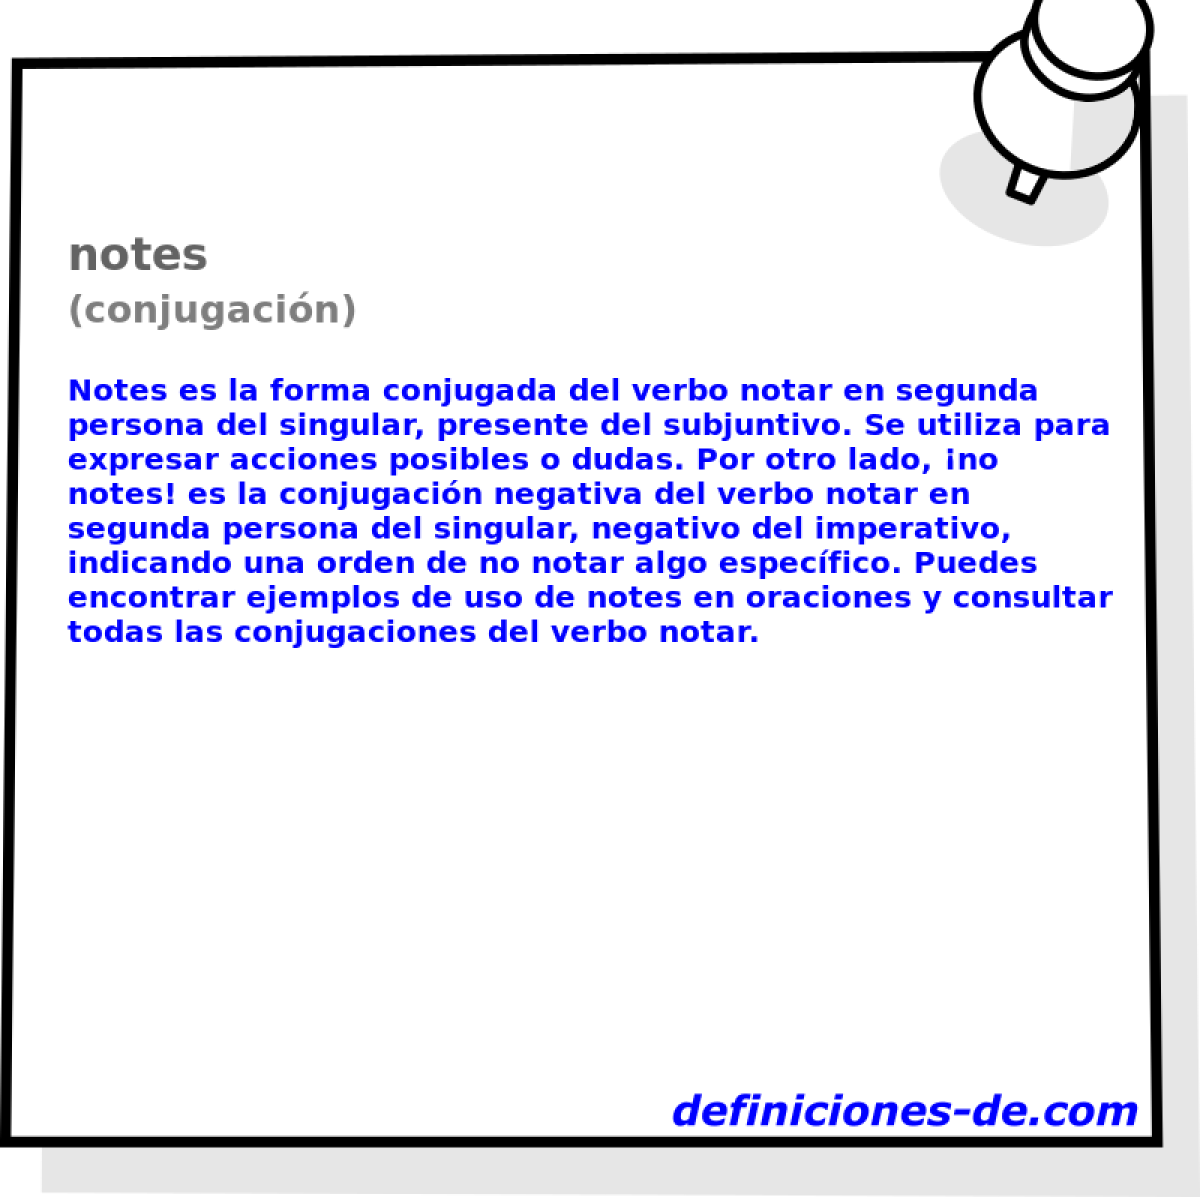 notes (conjugacin)